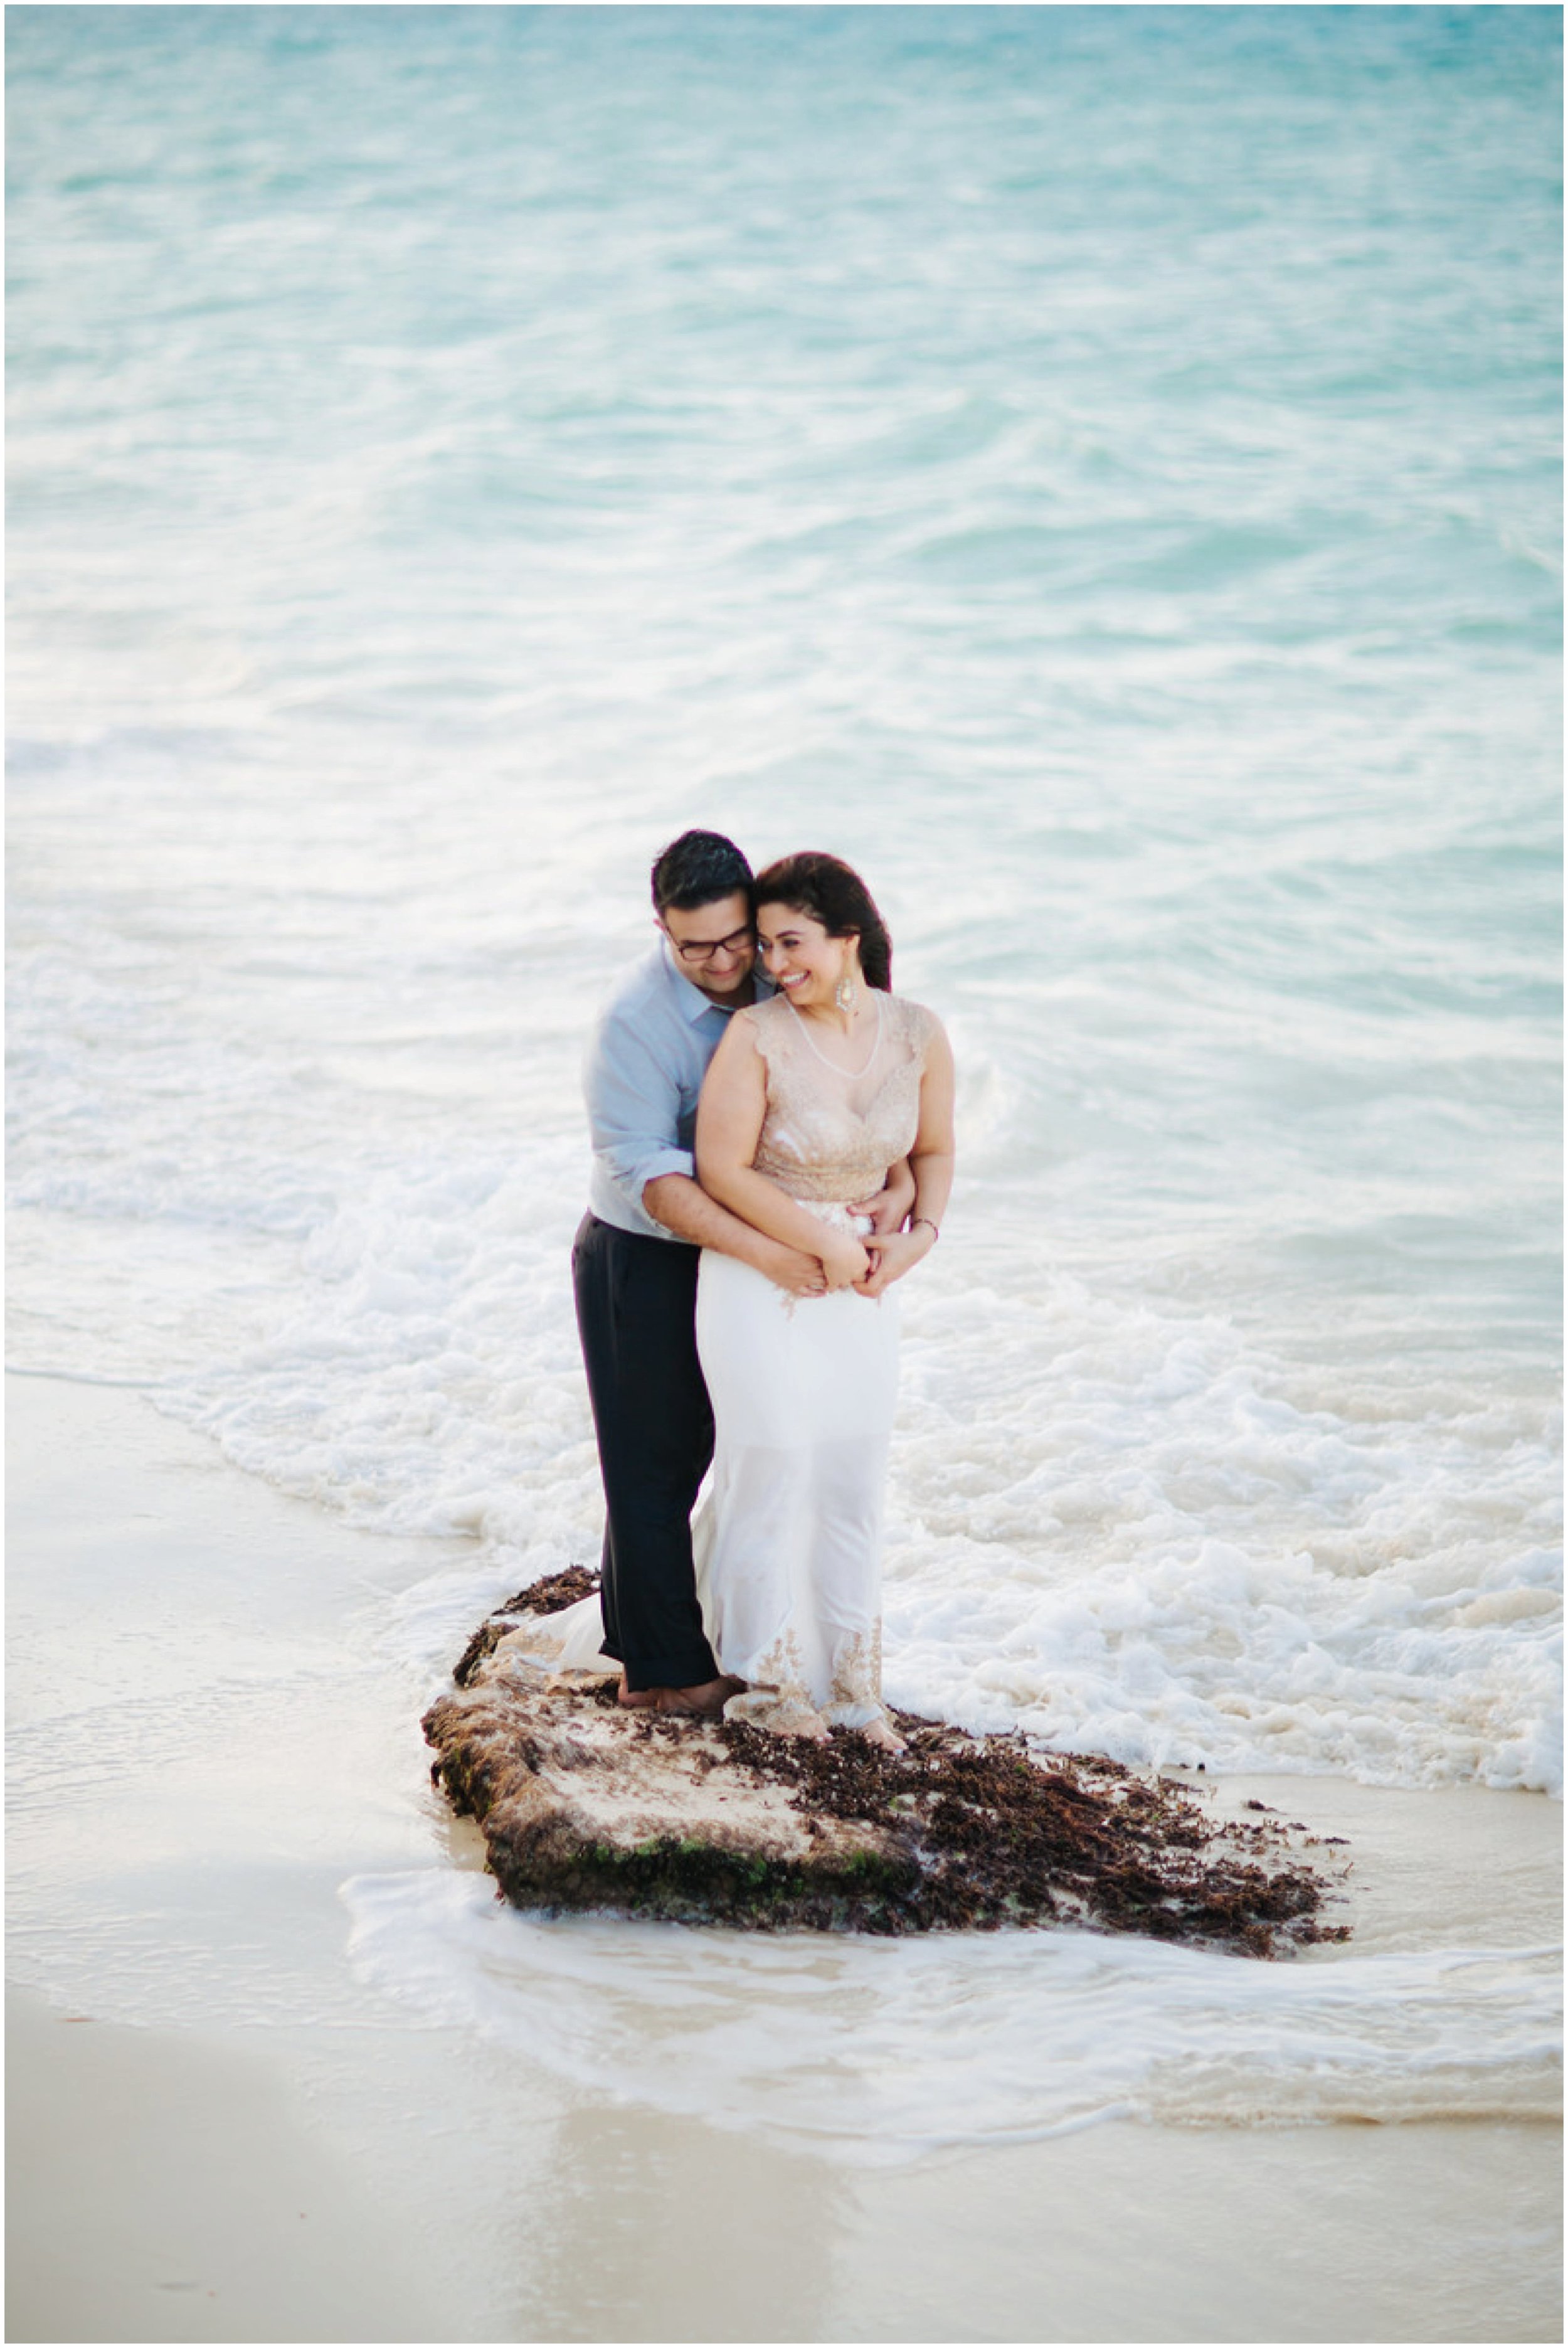 Le Cape Weddings- Destination Wedding Photography -ShayanandNikkie-41-X3_LuxuryDestinationPhotographer.jpg